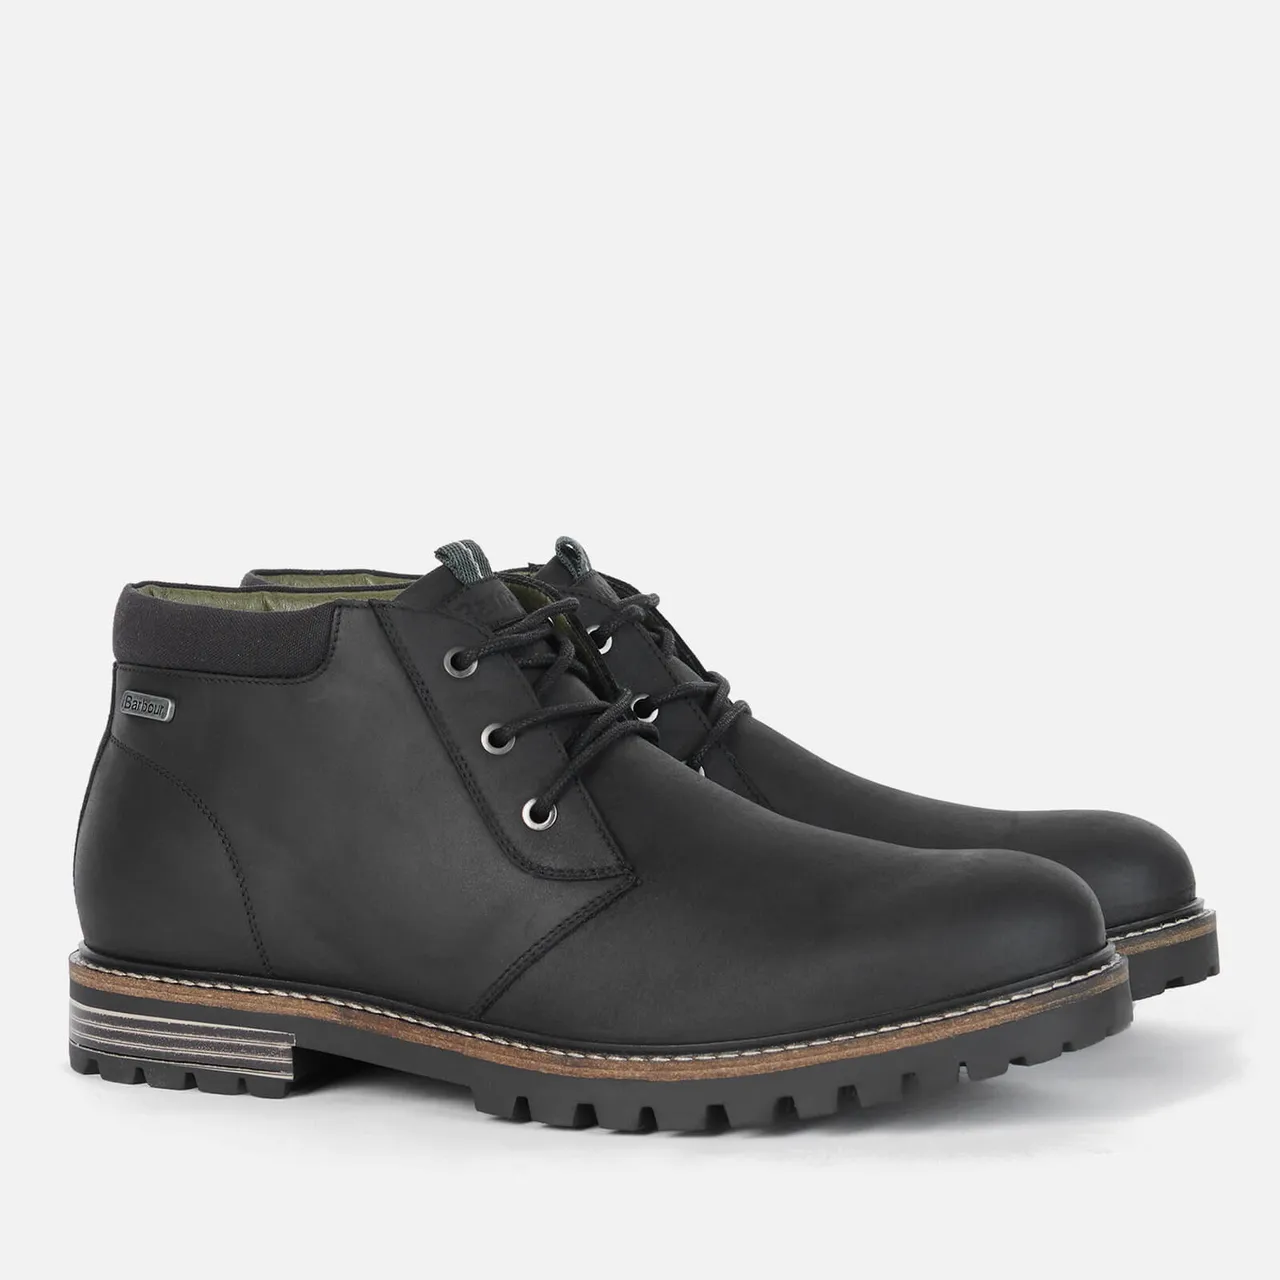 Barbour Men's Boulder Leather Chukka Boots - UK